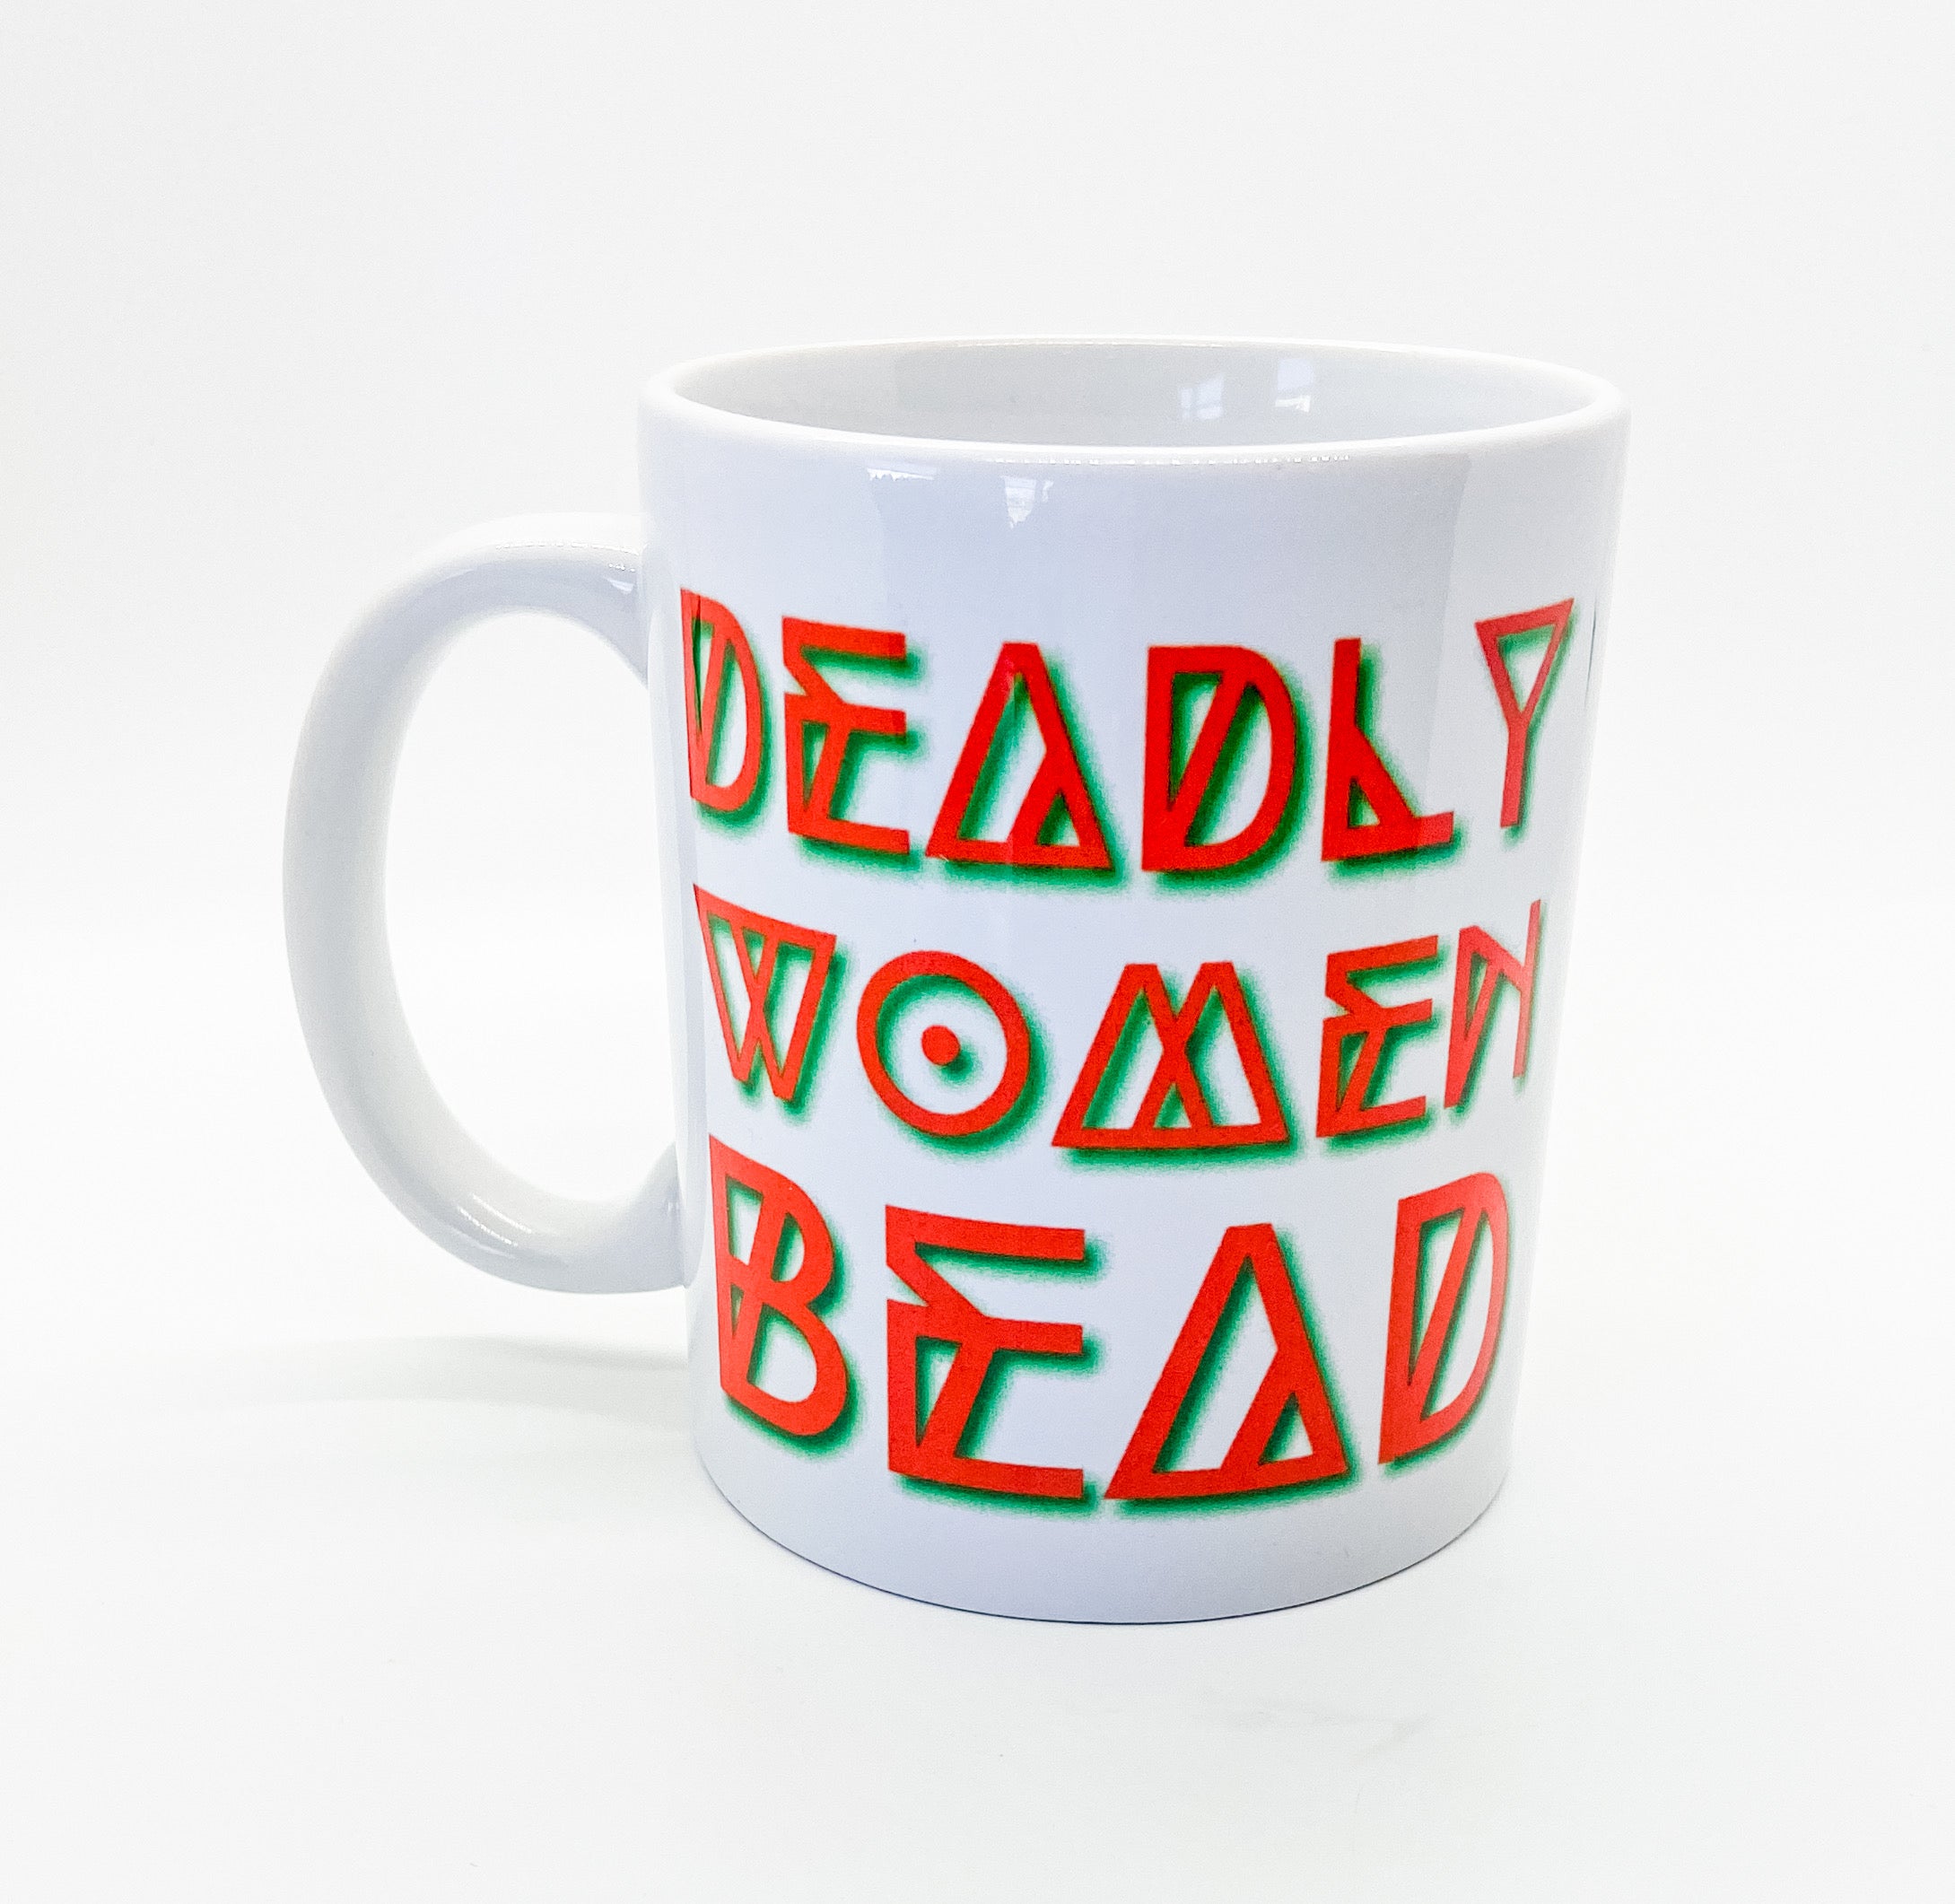 Deadly Women Bead mug